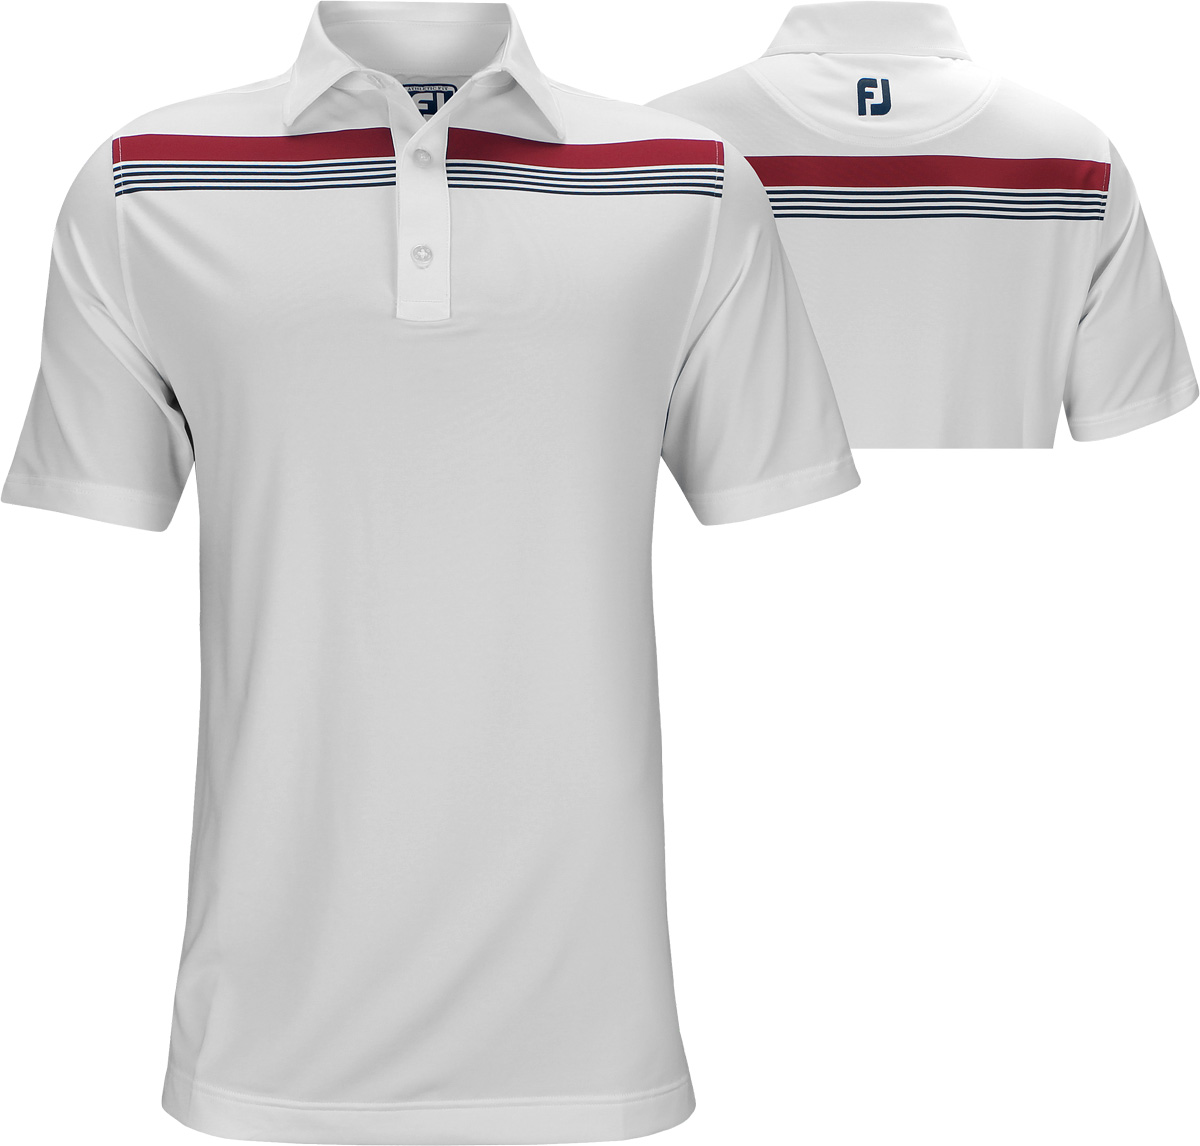 athletic golf shirts